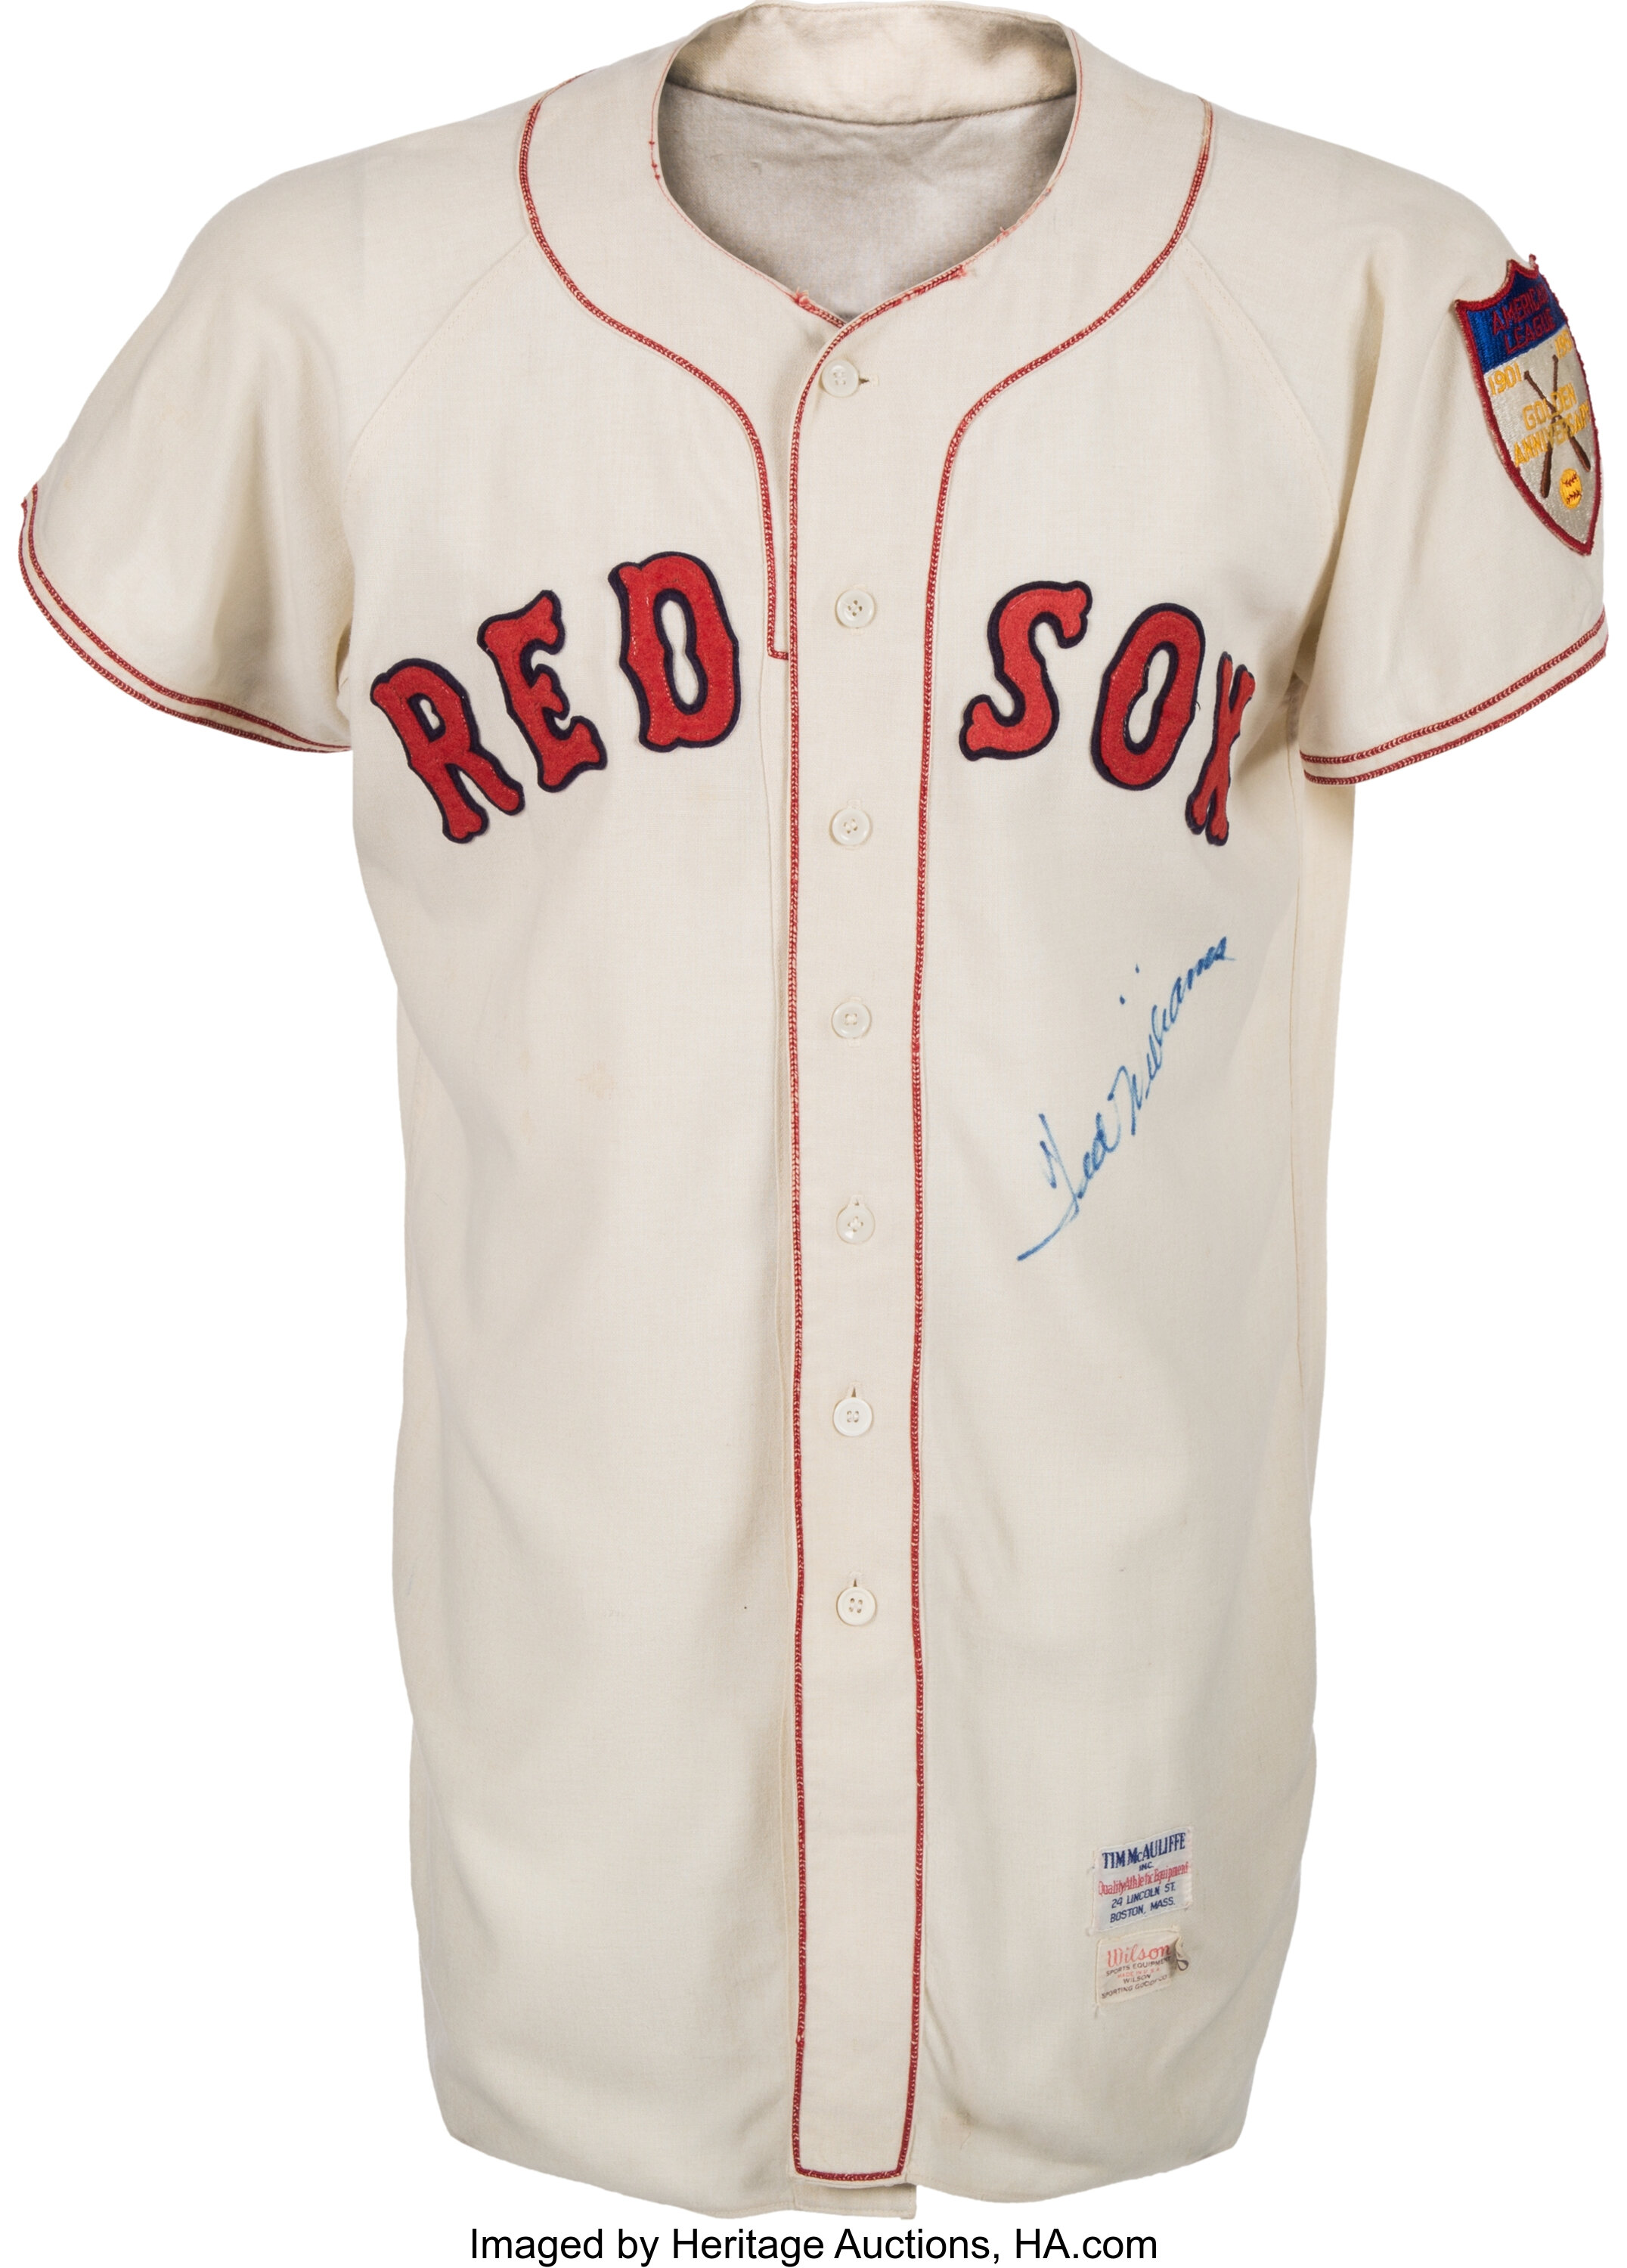 Boston Red Sox Jersey, Red Sox Baseball Jerseys, Uniforms